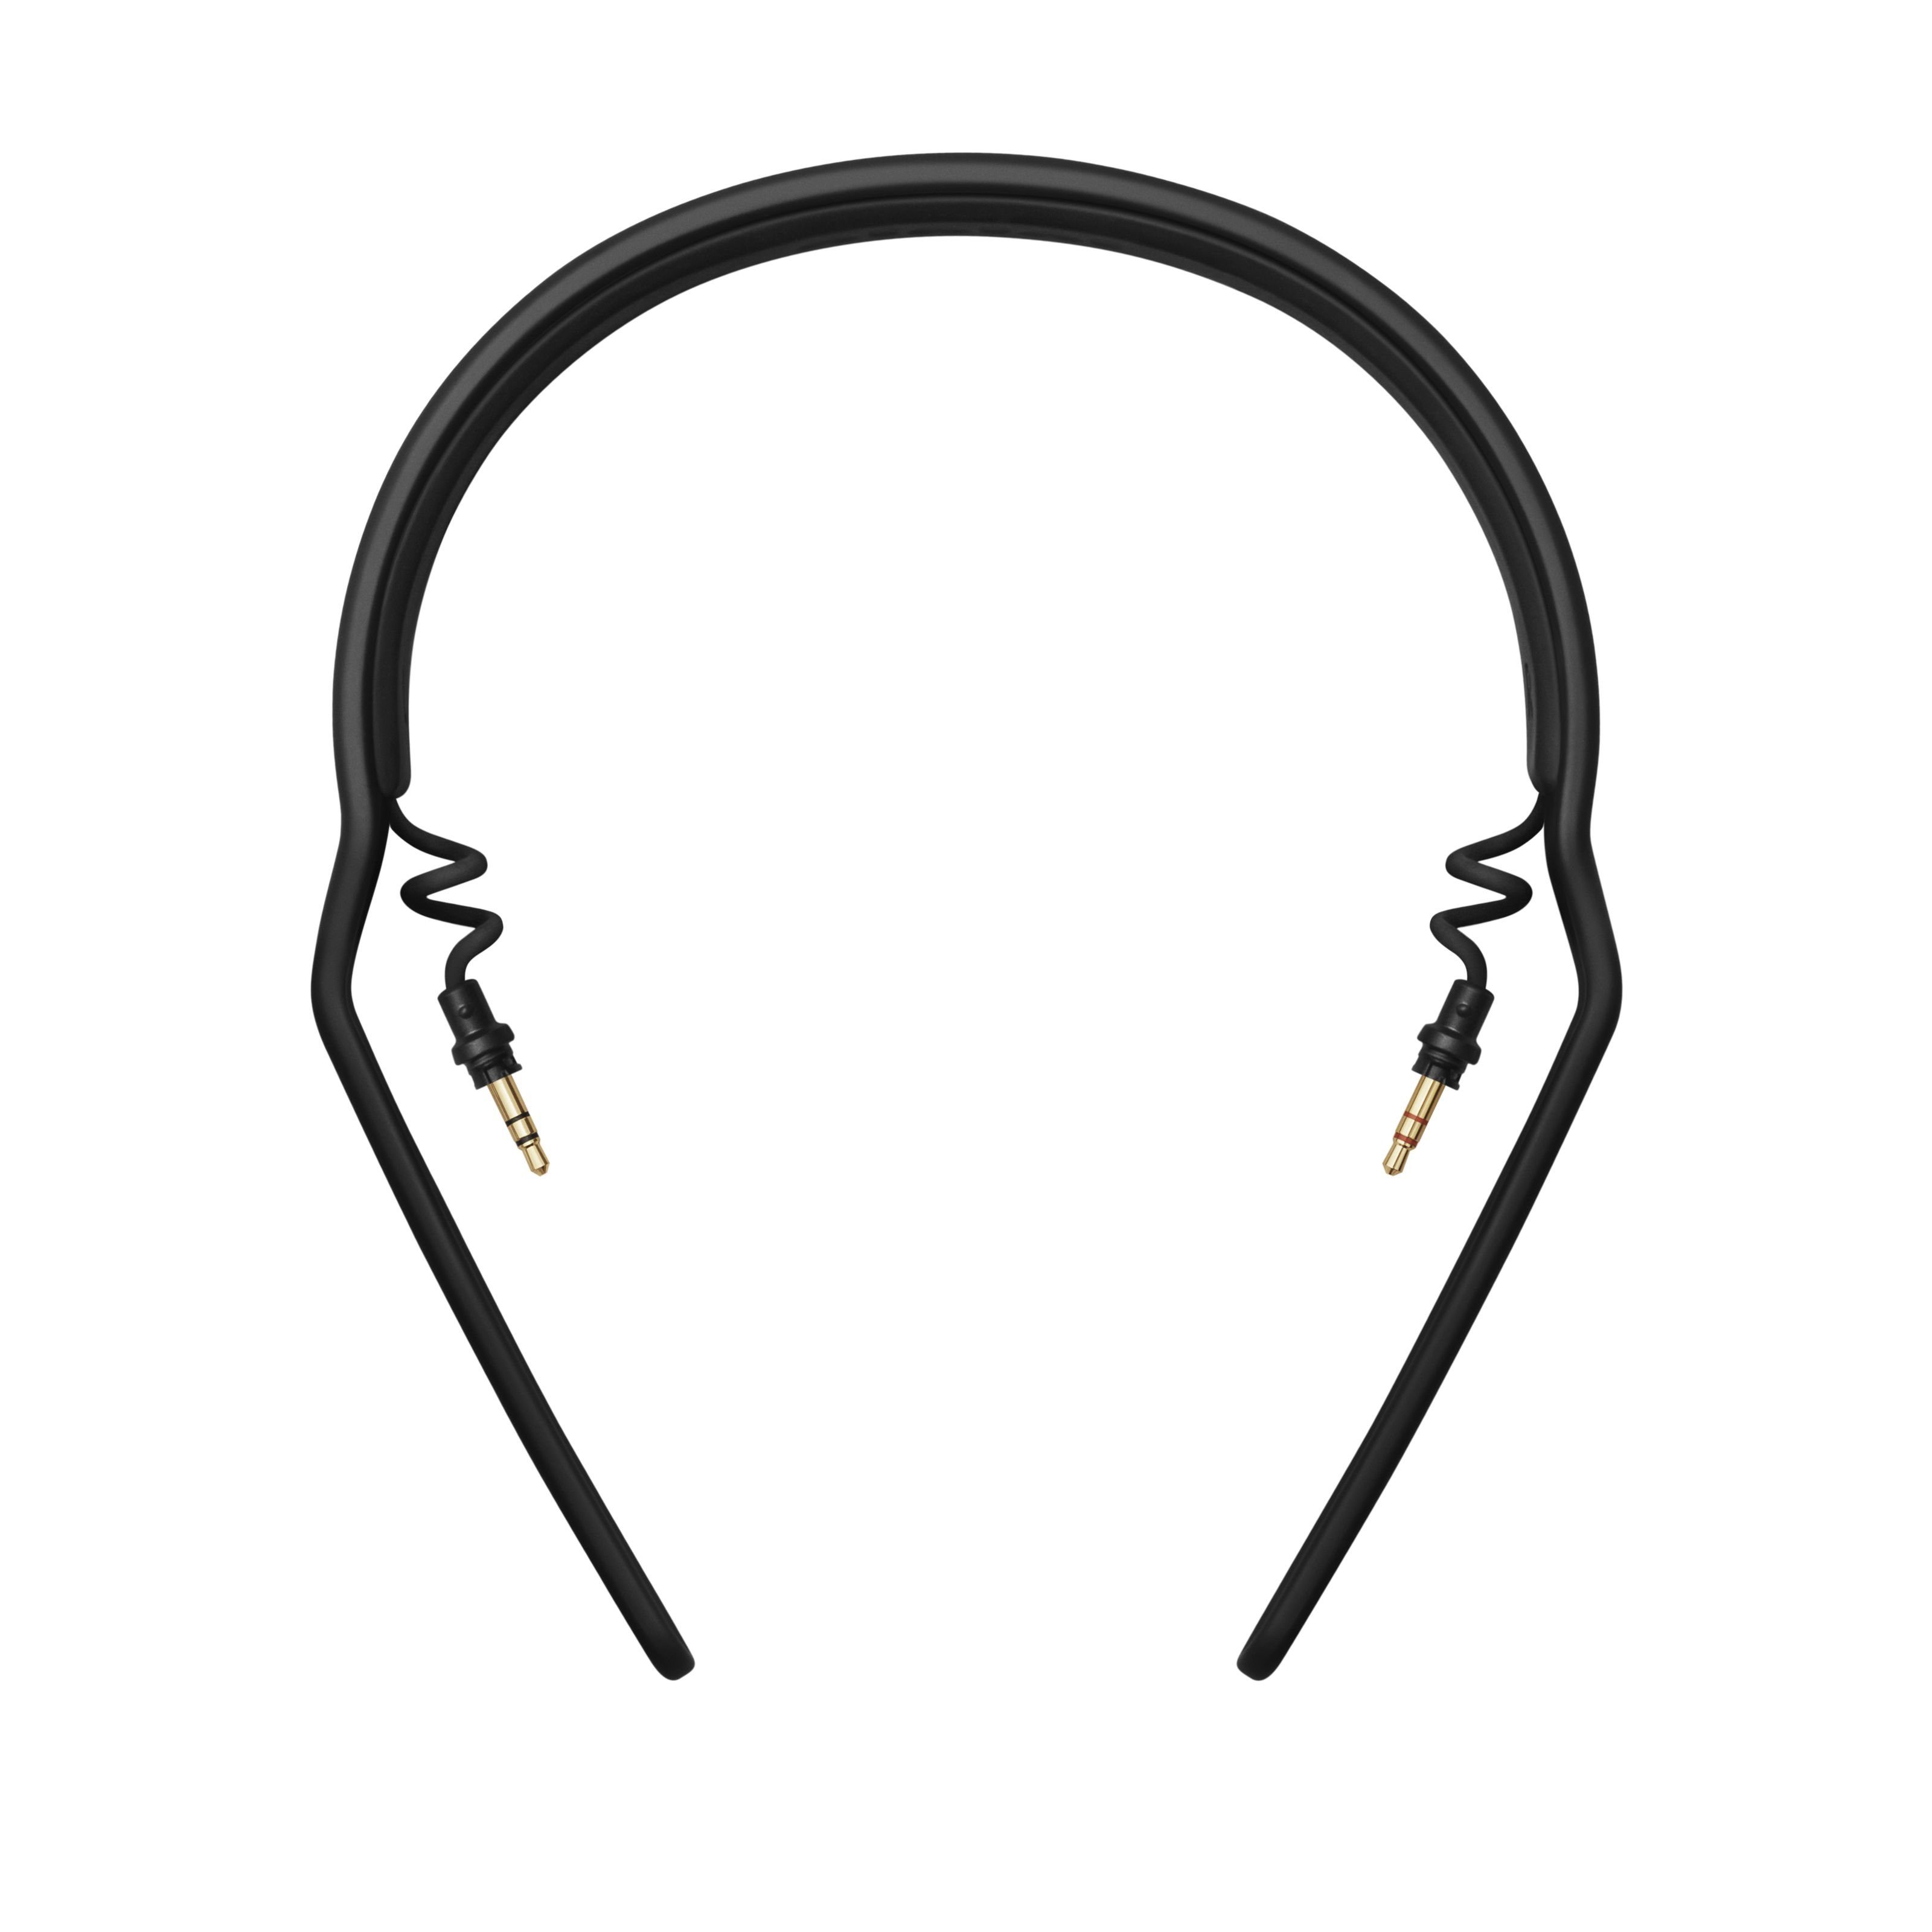 AIAIAI DJ-Kopfhörer (H02 - Nylon silicone padding Headband for TMA-2 - DJ Kopfhörer)